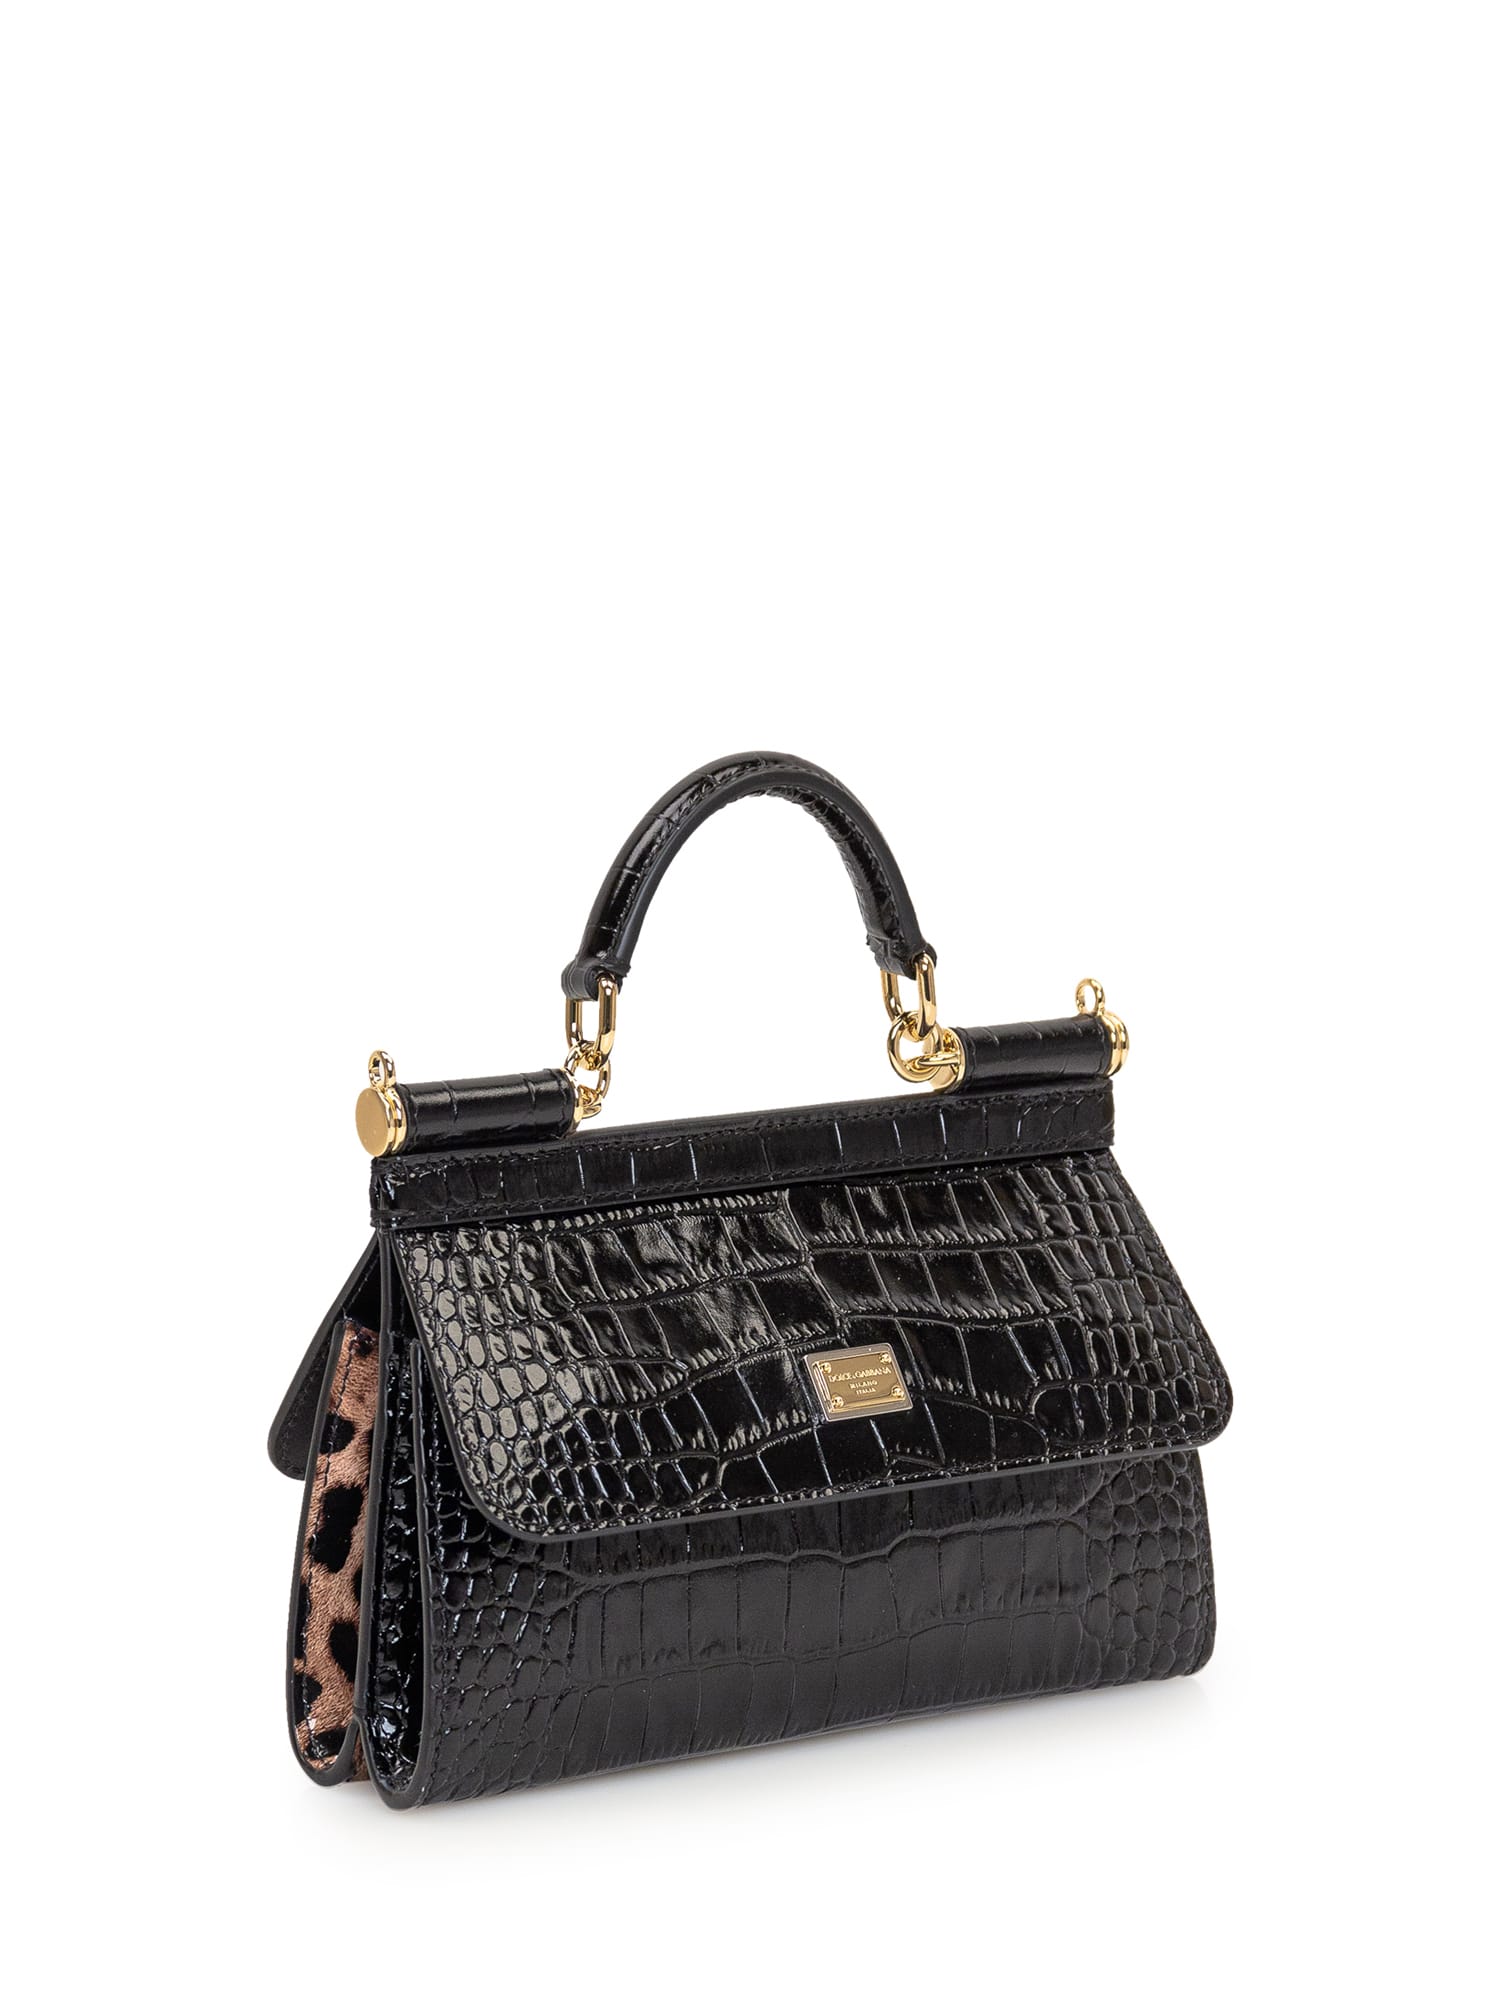 Dolce & Gabbana Kim Crocodile-Embossed Sicily Bag